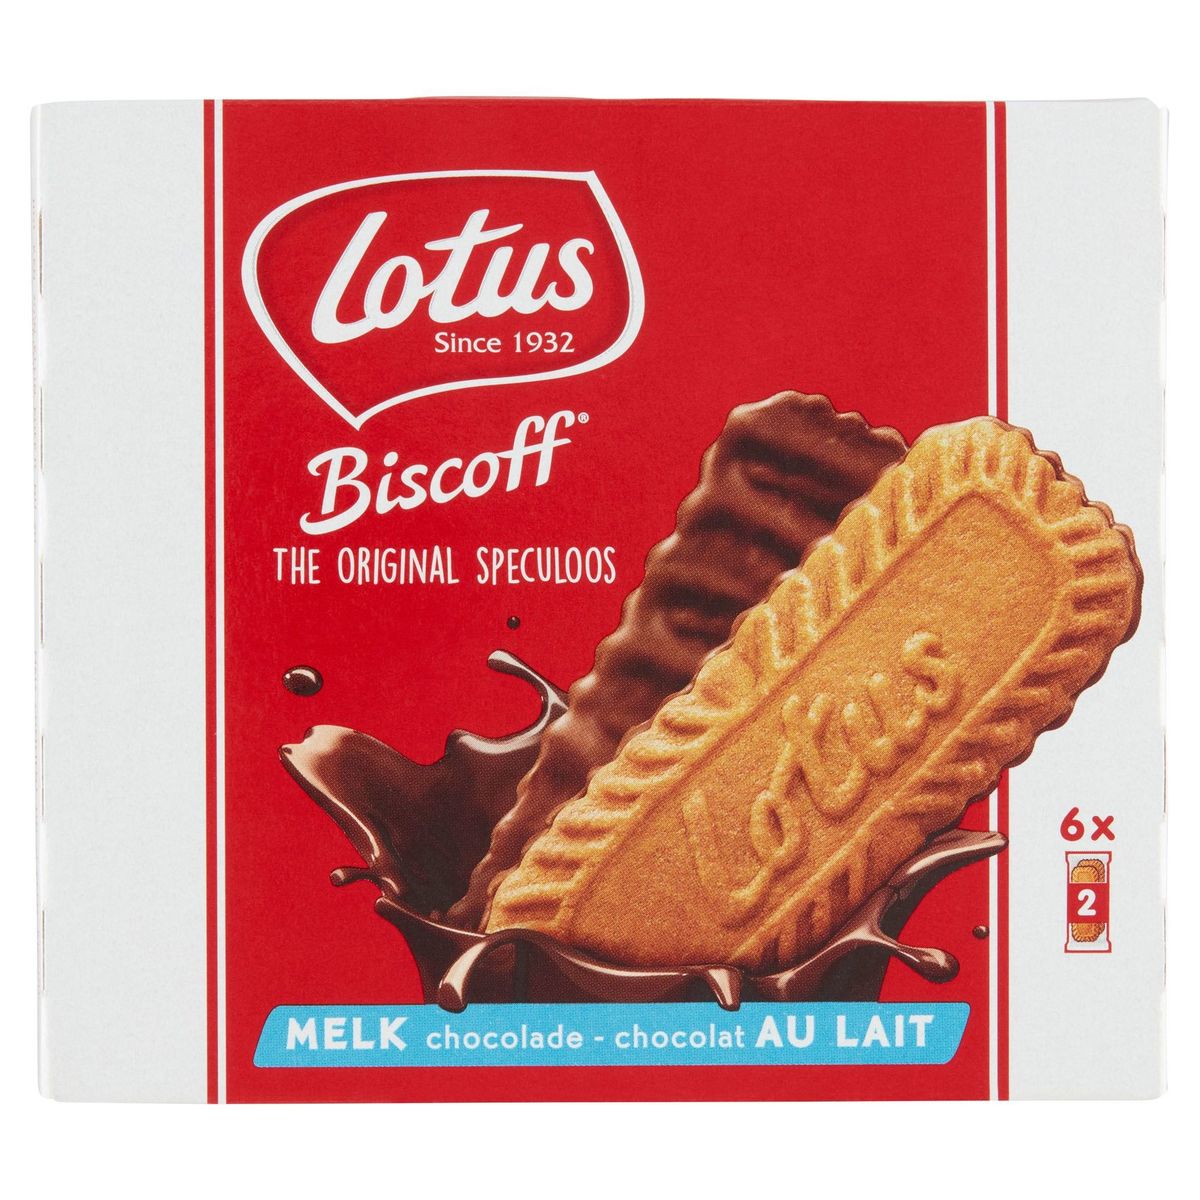 Lotus Biscoff Speculoos Chocolat au Lait 6 x 2 pièces 162 g